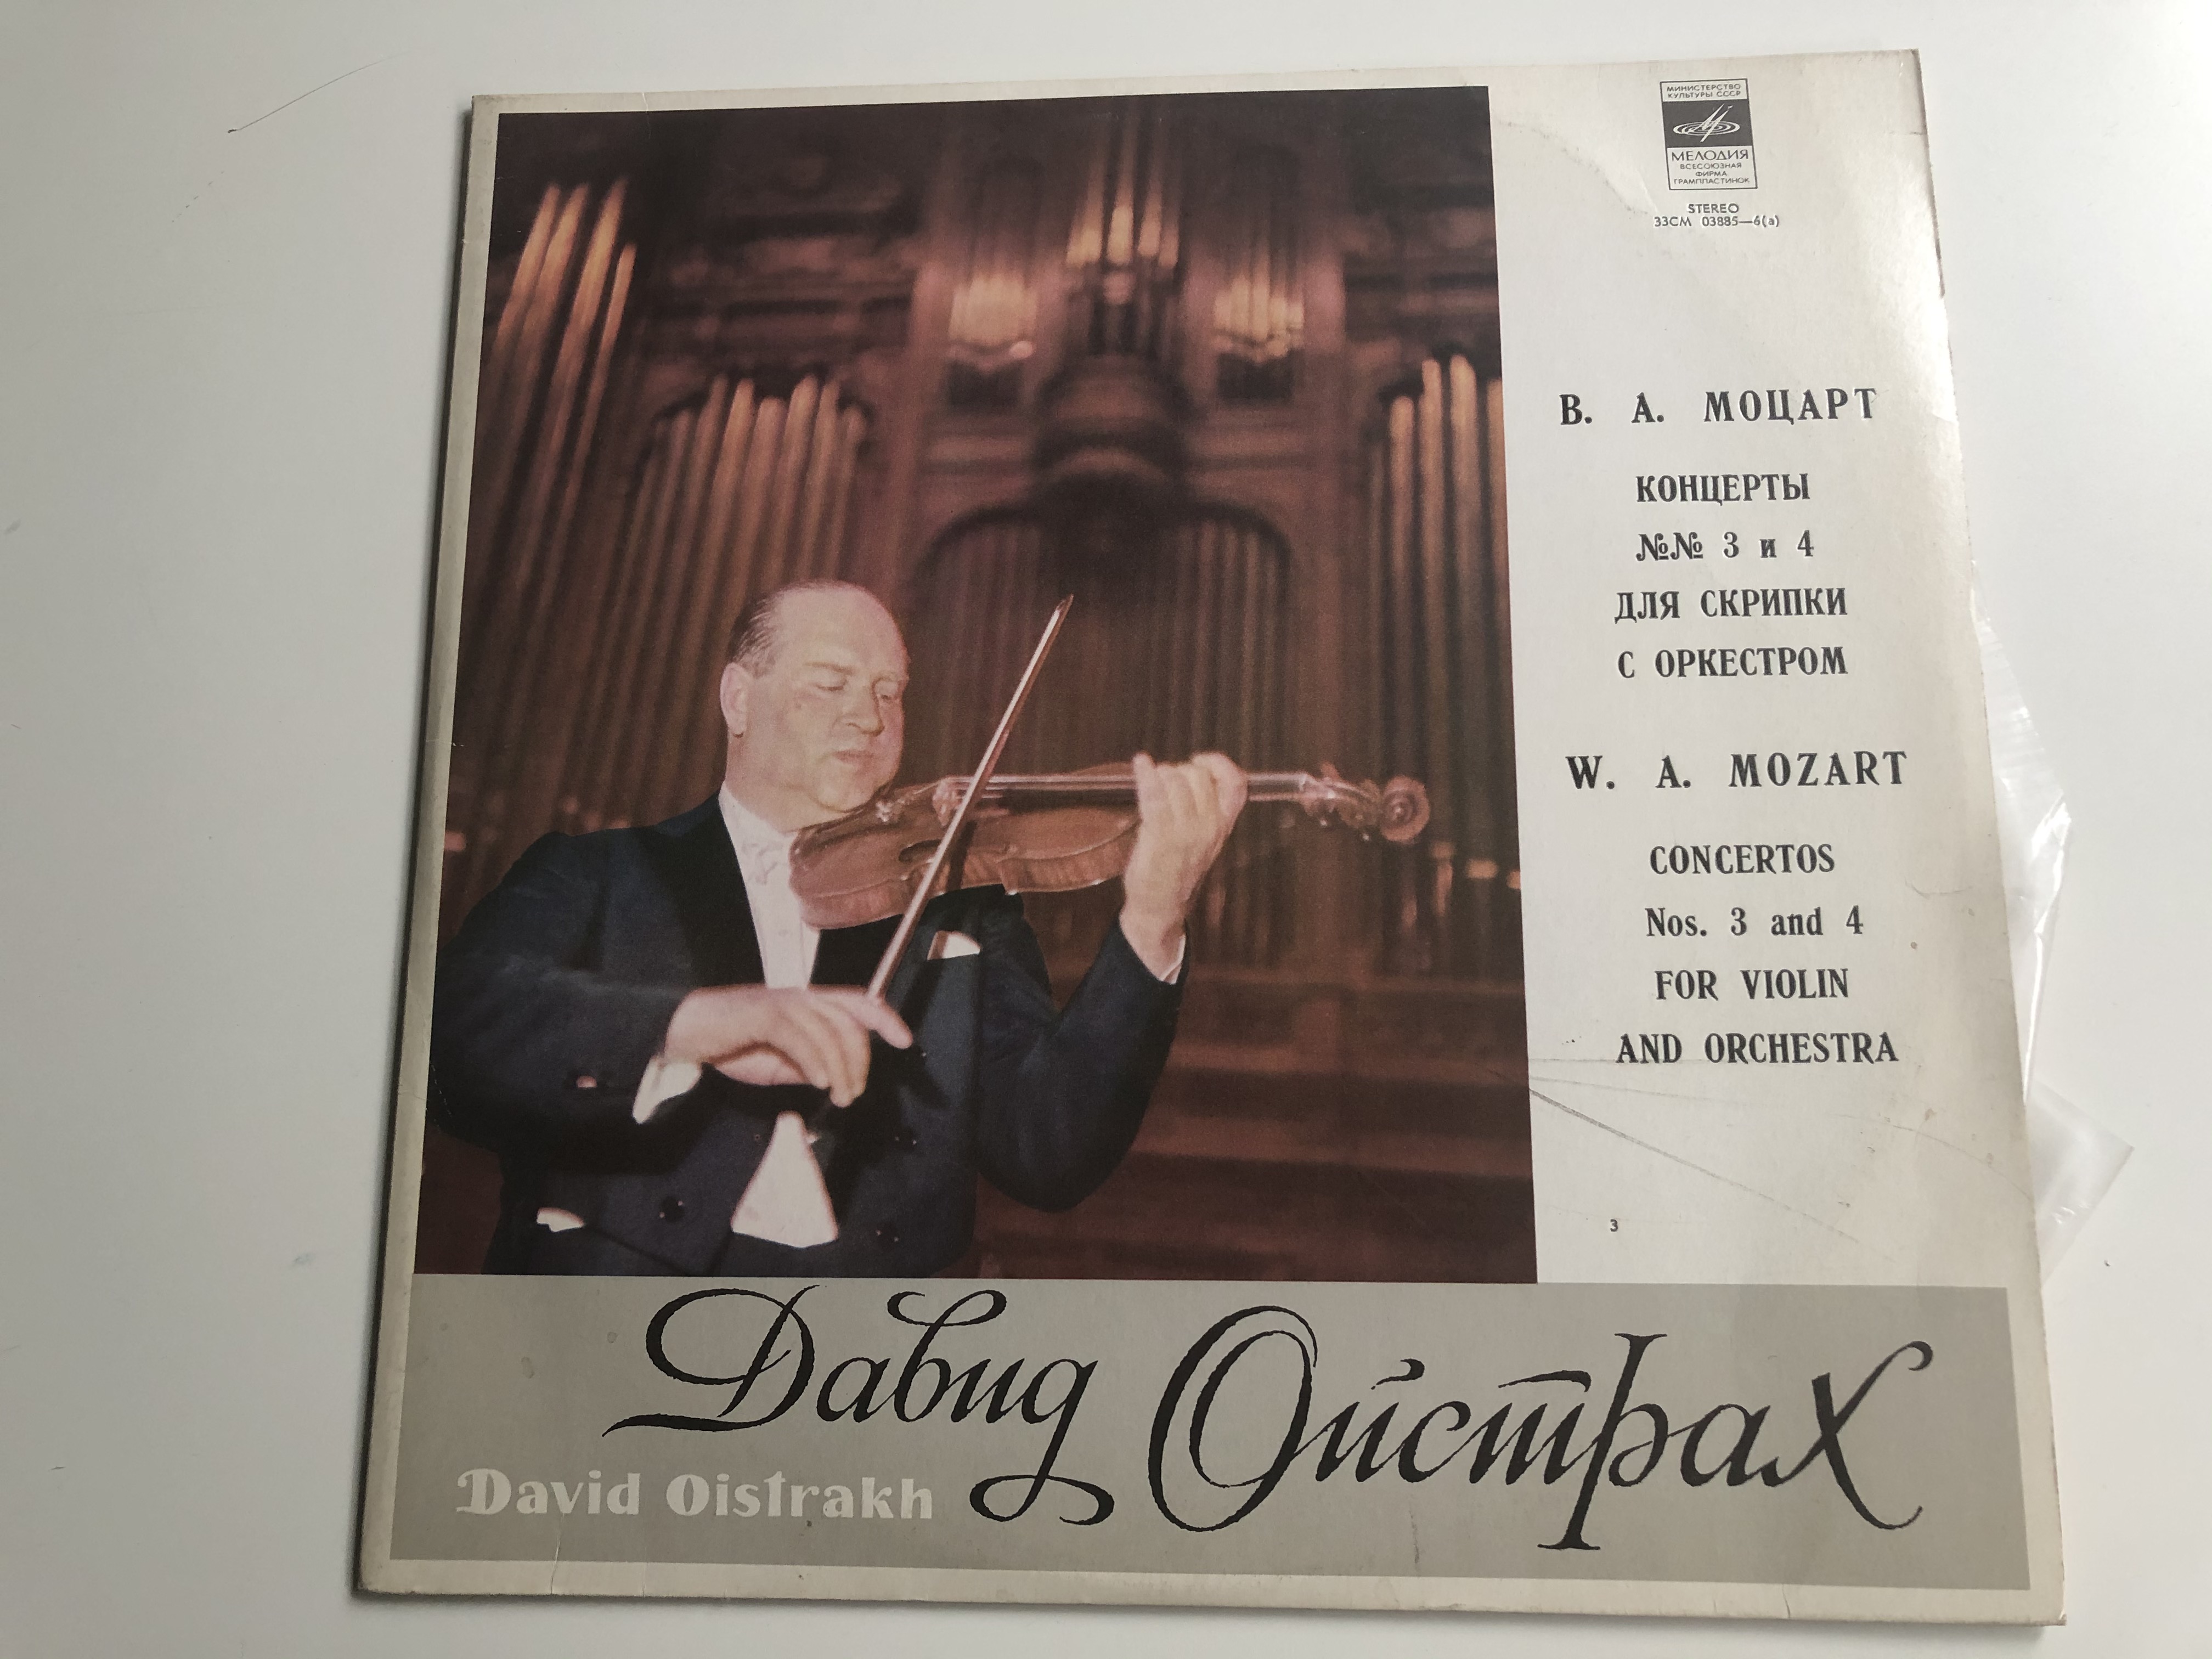 david-oistrakh-w.-a.-mozart-concertos-nos.-3-and-4-for-violin-and-orchestra-lp-stereo-33cm-03885-6-a-1-.jpg